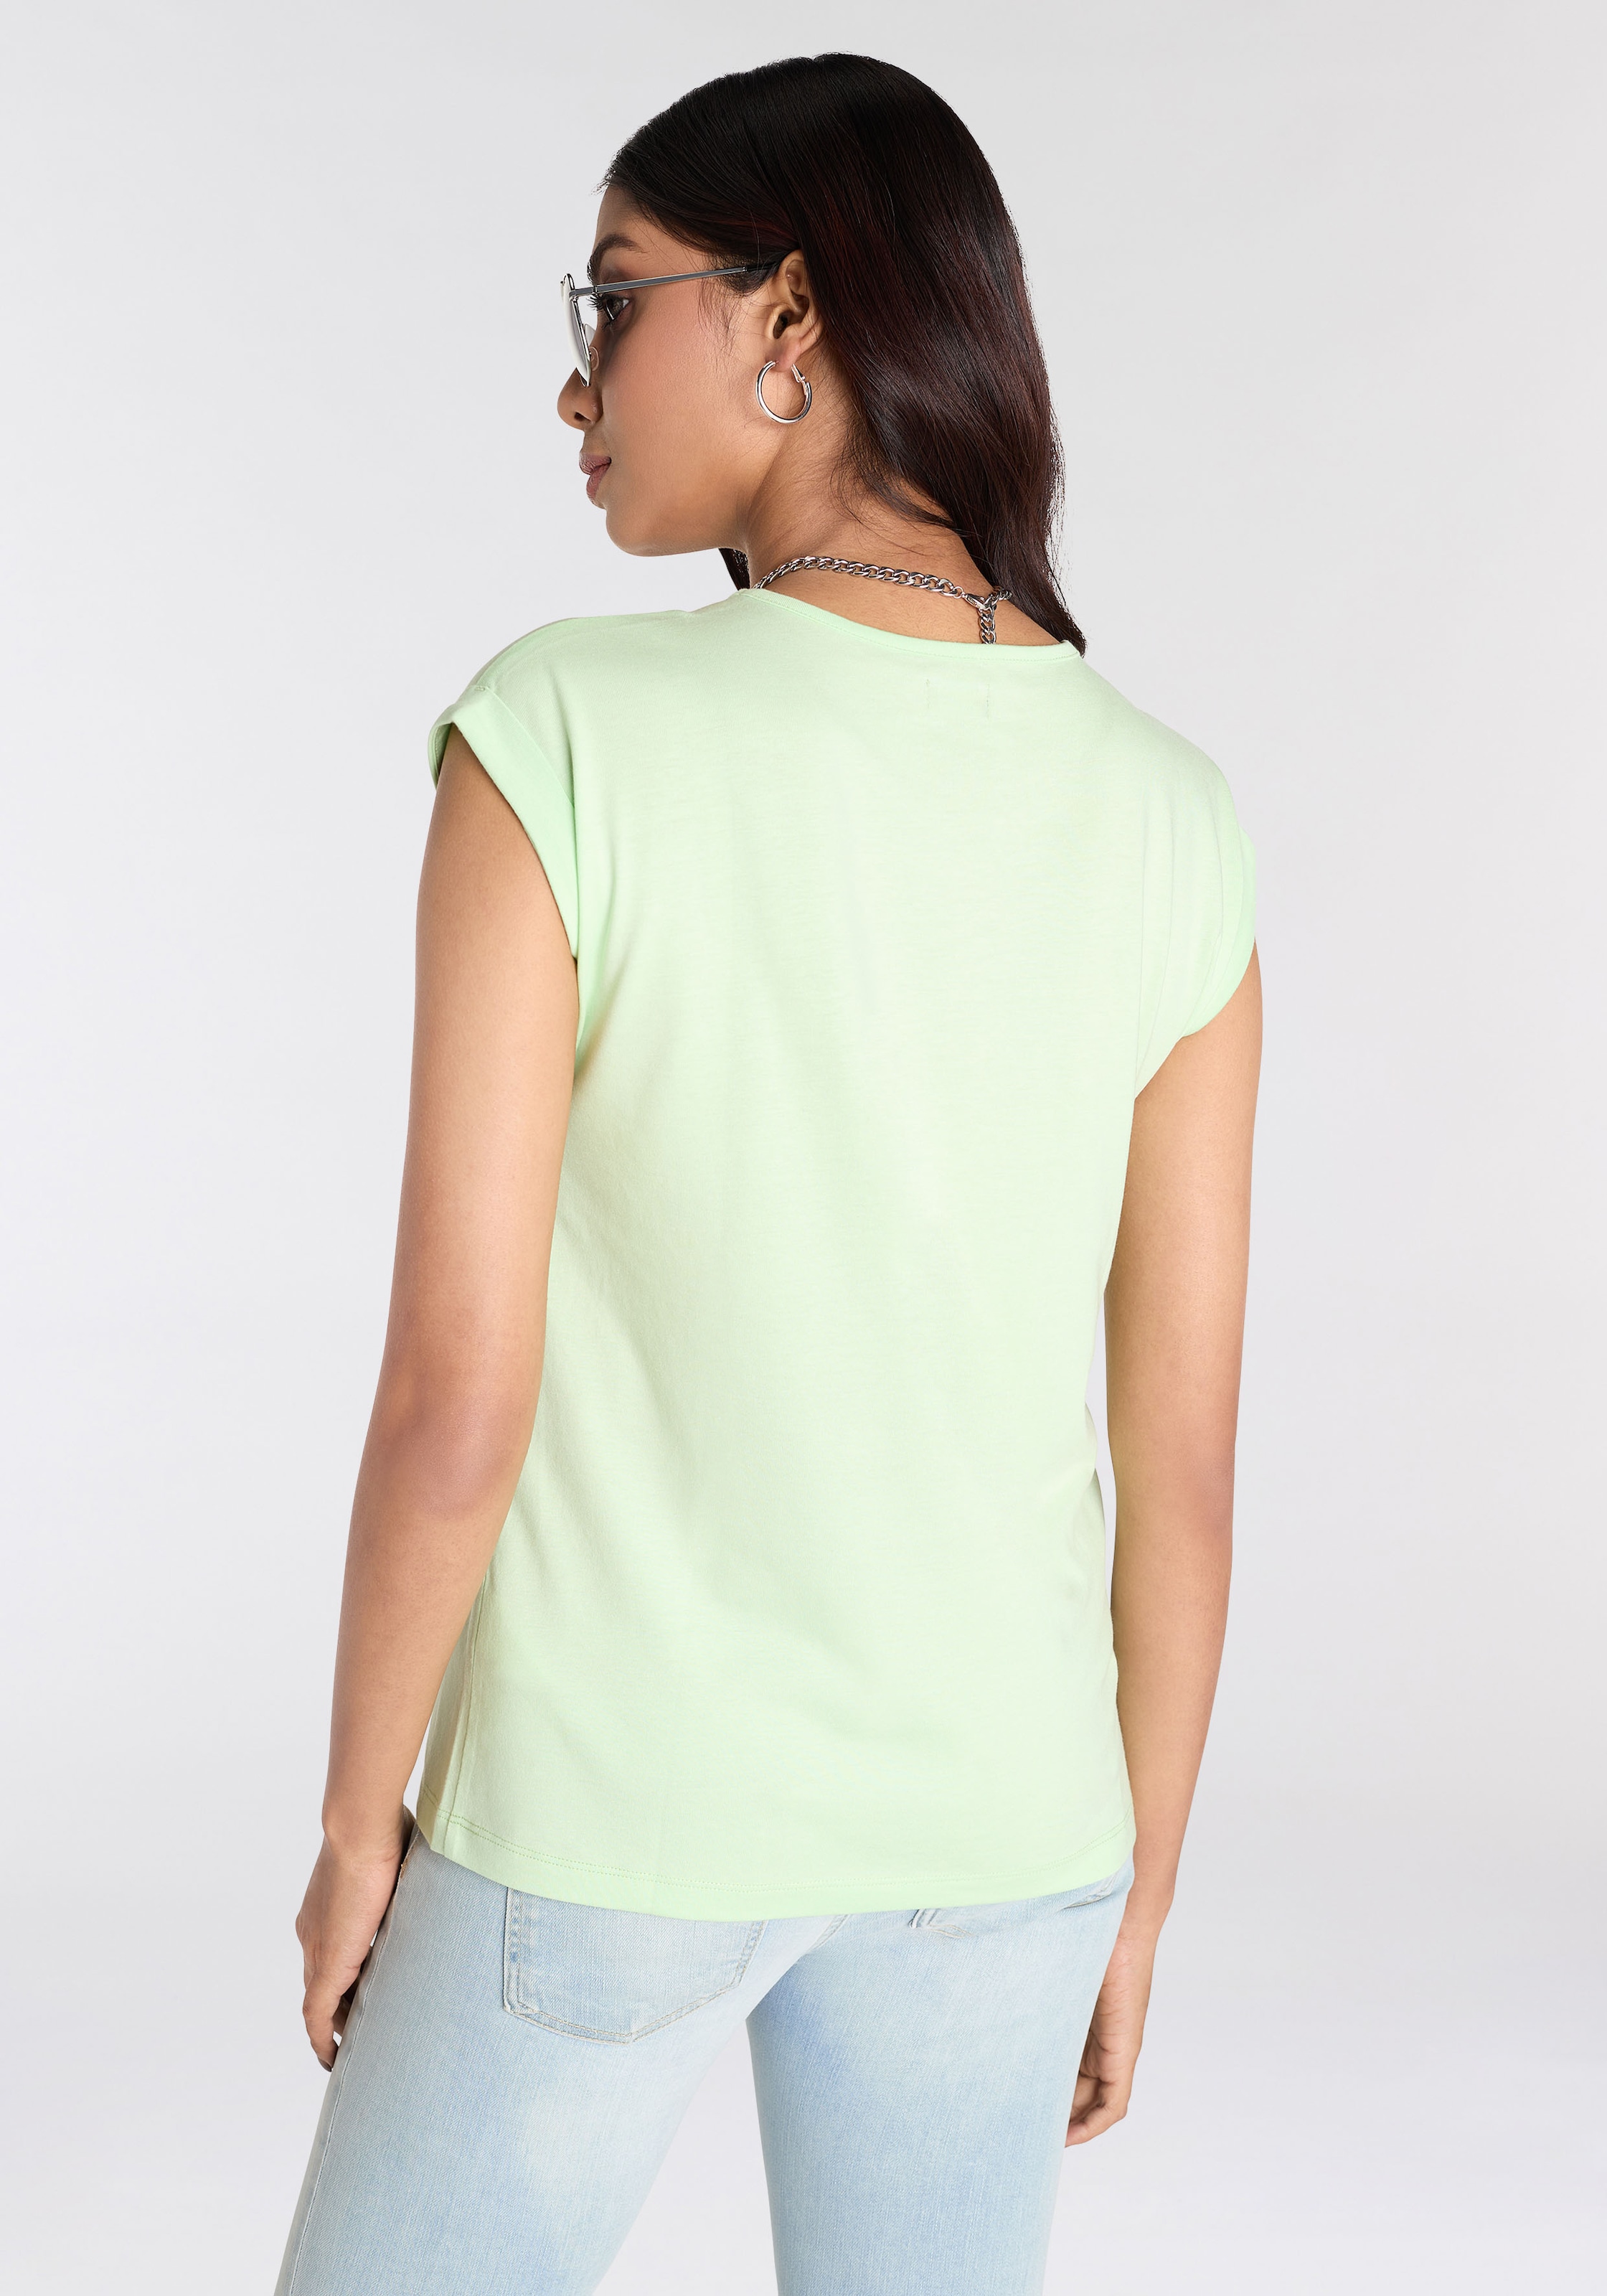 Laura Scott T-Shirt, (4 tlg.), in modernen Farben - NEUE KOLLEKTION